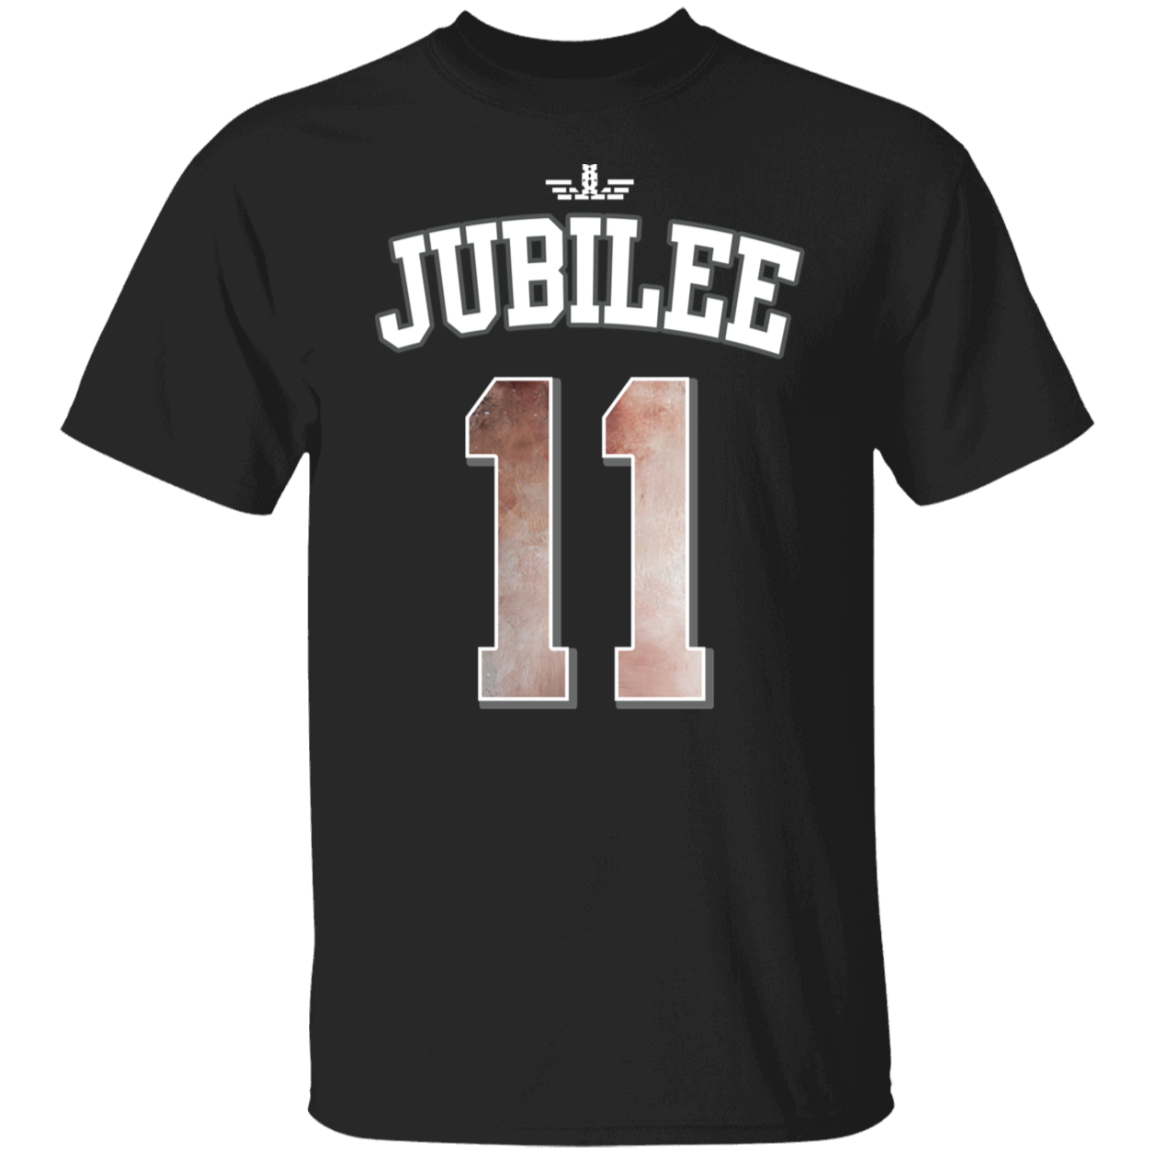 Air Jordan 11 Jubilee Fan Unisex T-Shirt, Sweatshirt, Hoodie